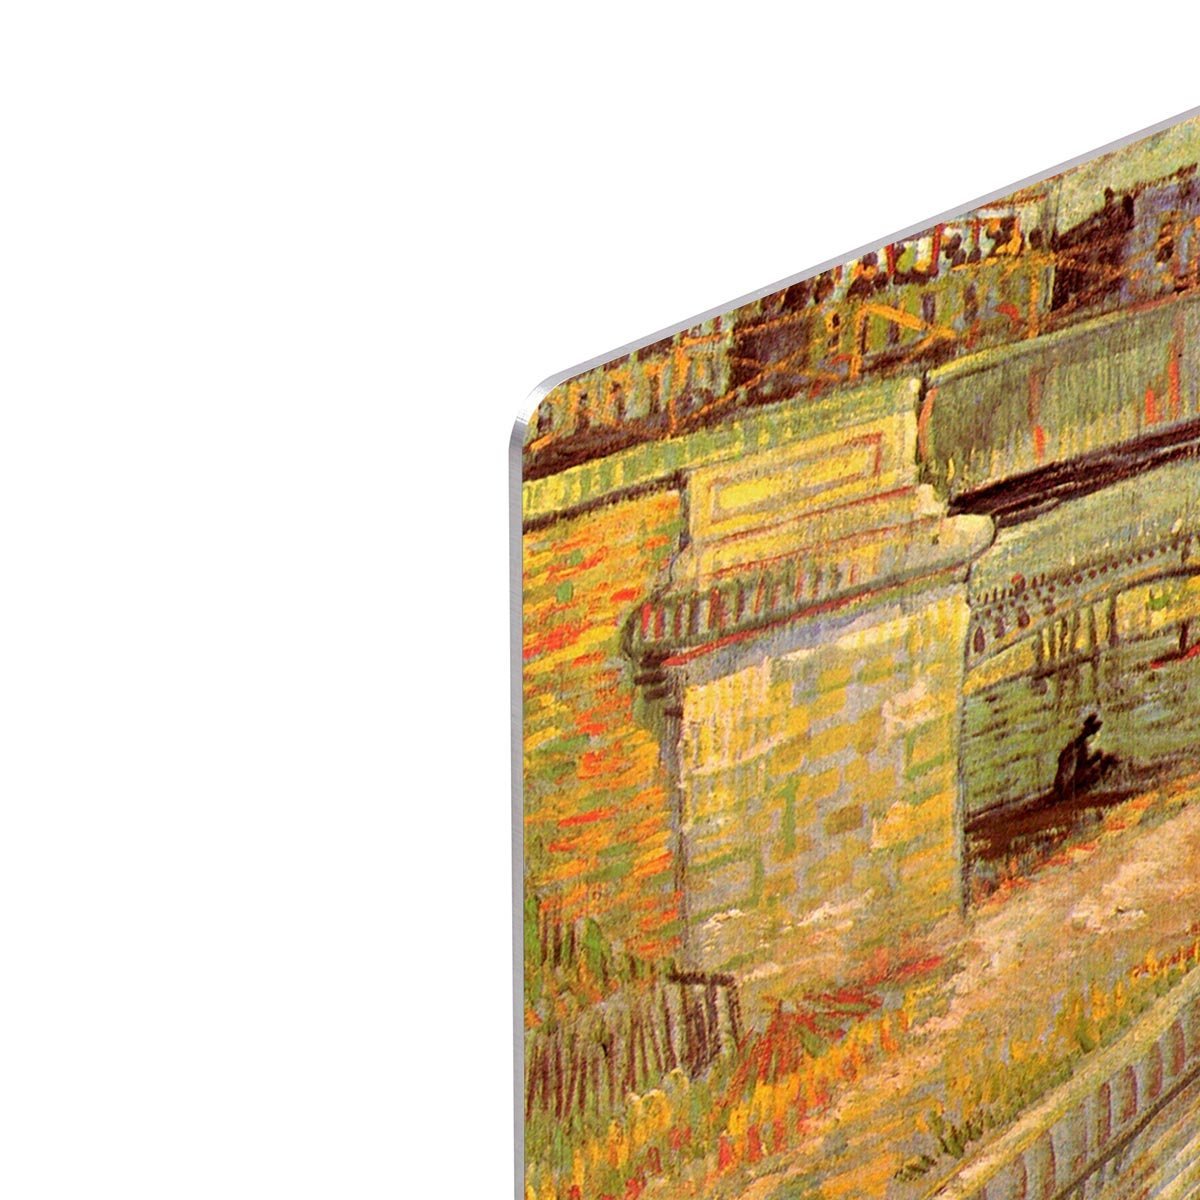 Bridges across the Seine at Asnieres by Van Gogh HD Metal Print